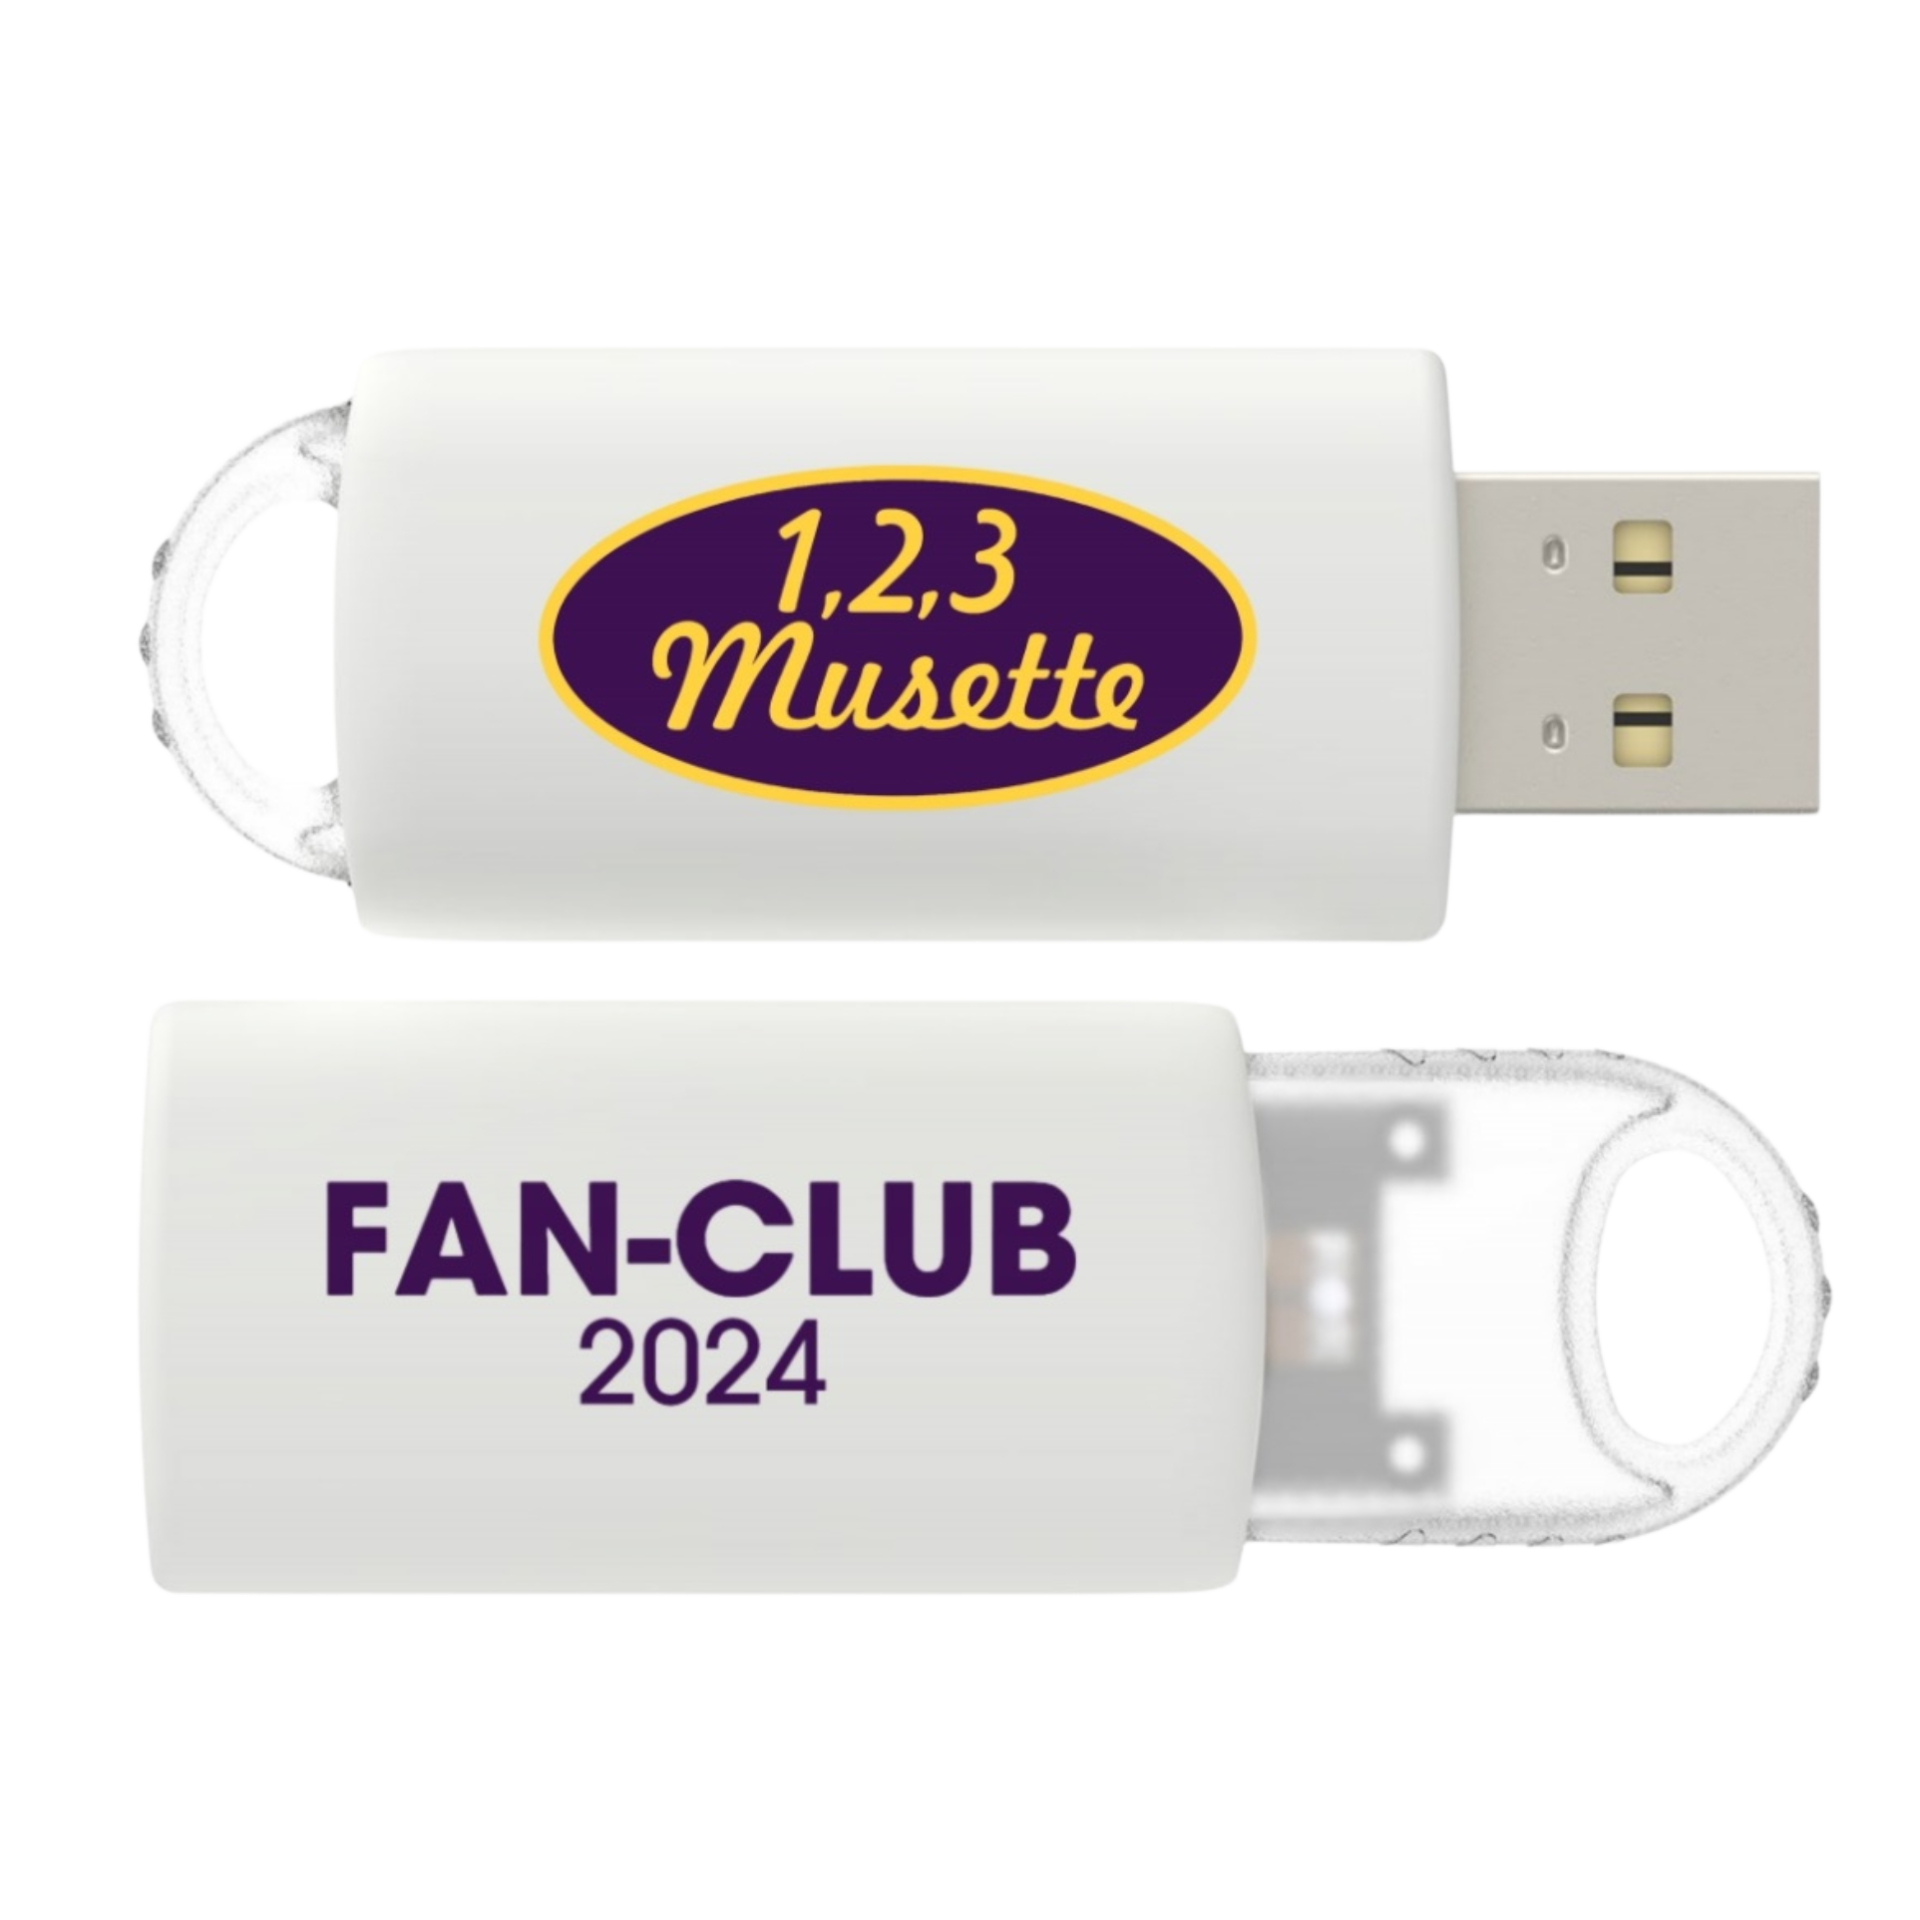 Cle usb fan club 2024 transparent